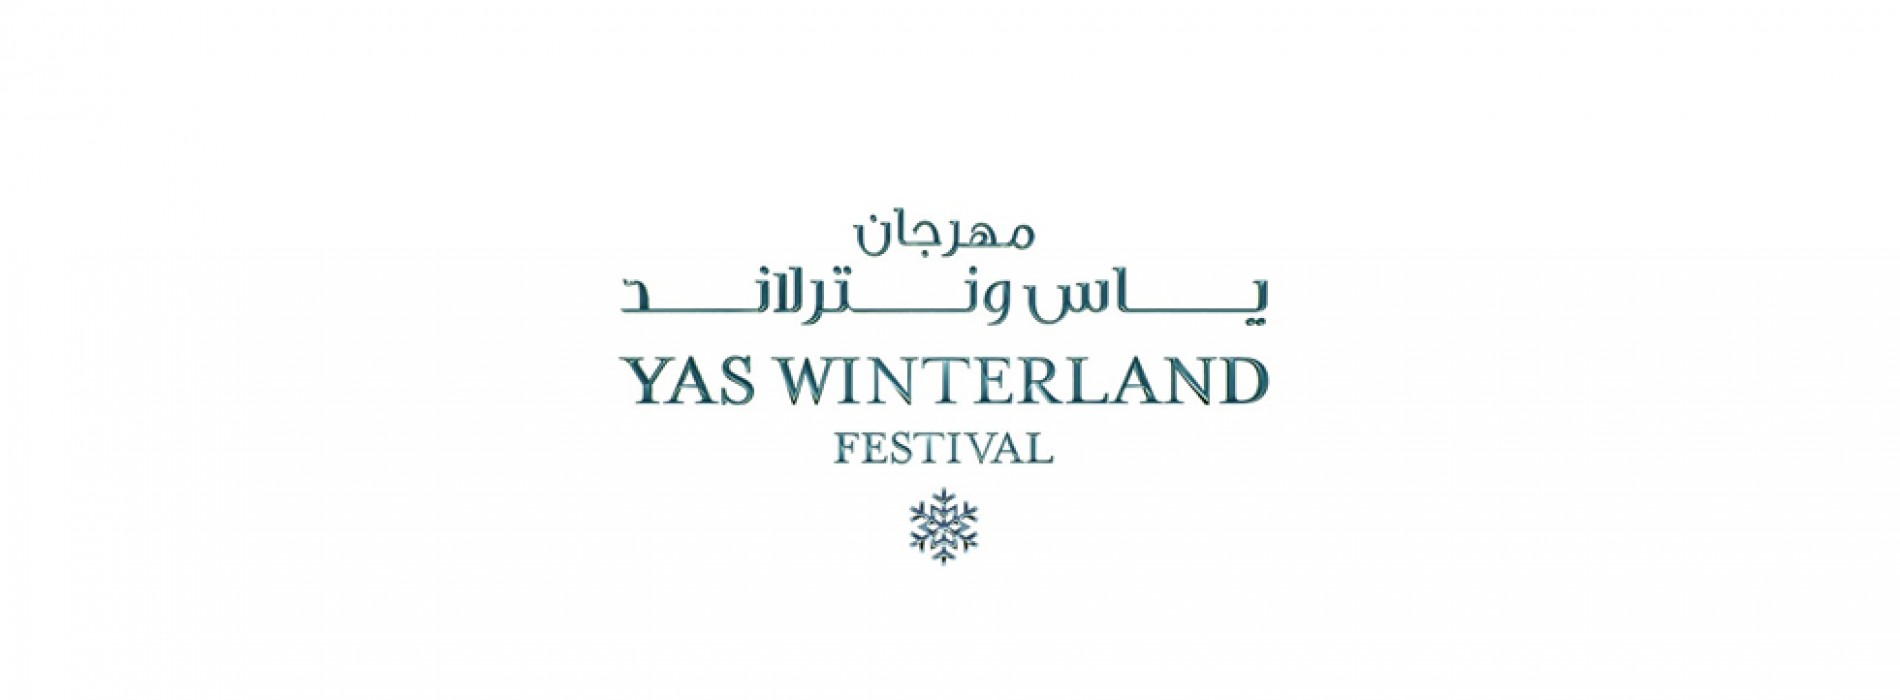 ‘Yas Winterland Festival’ celebrates the best of the festive season on Yas Island